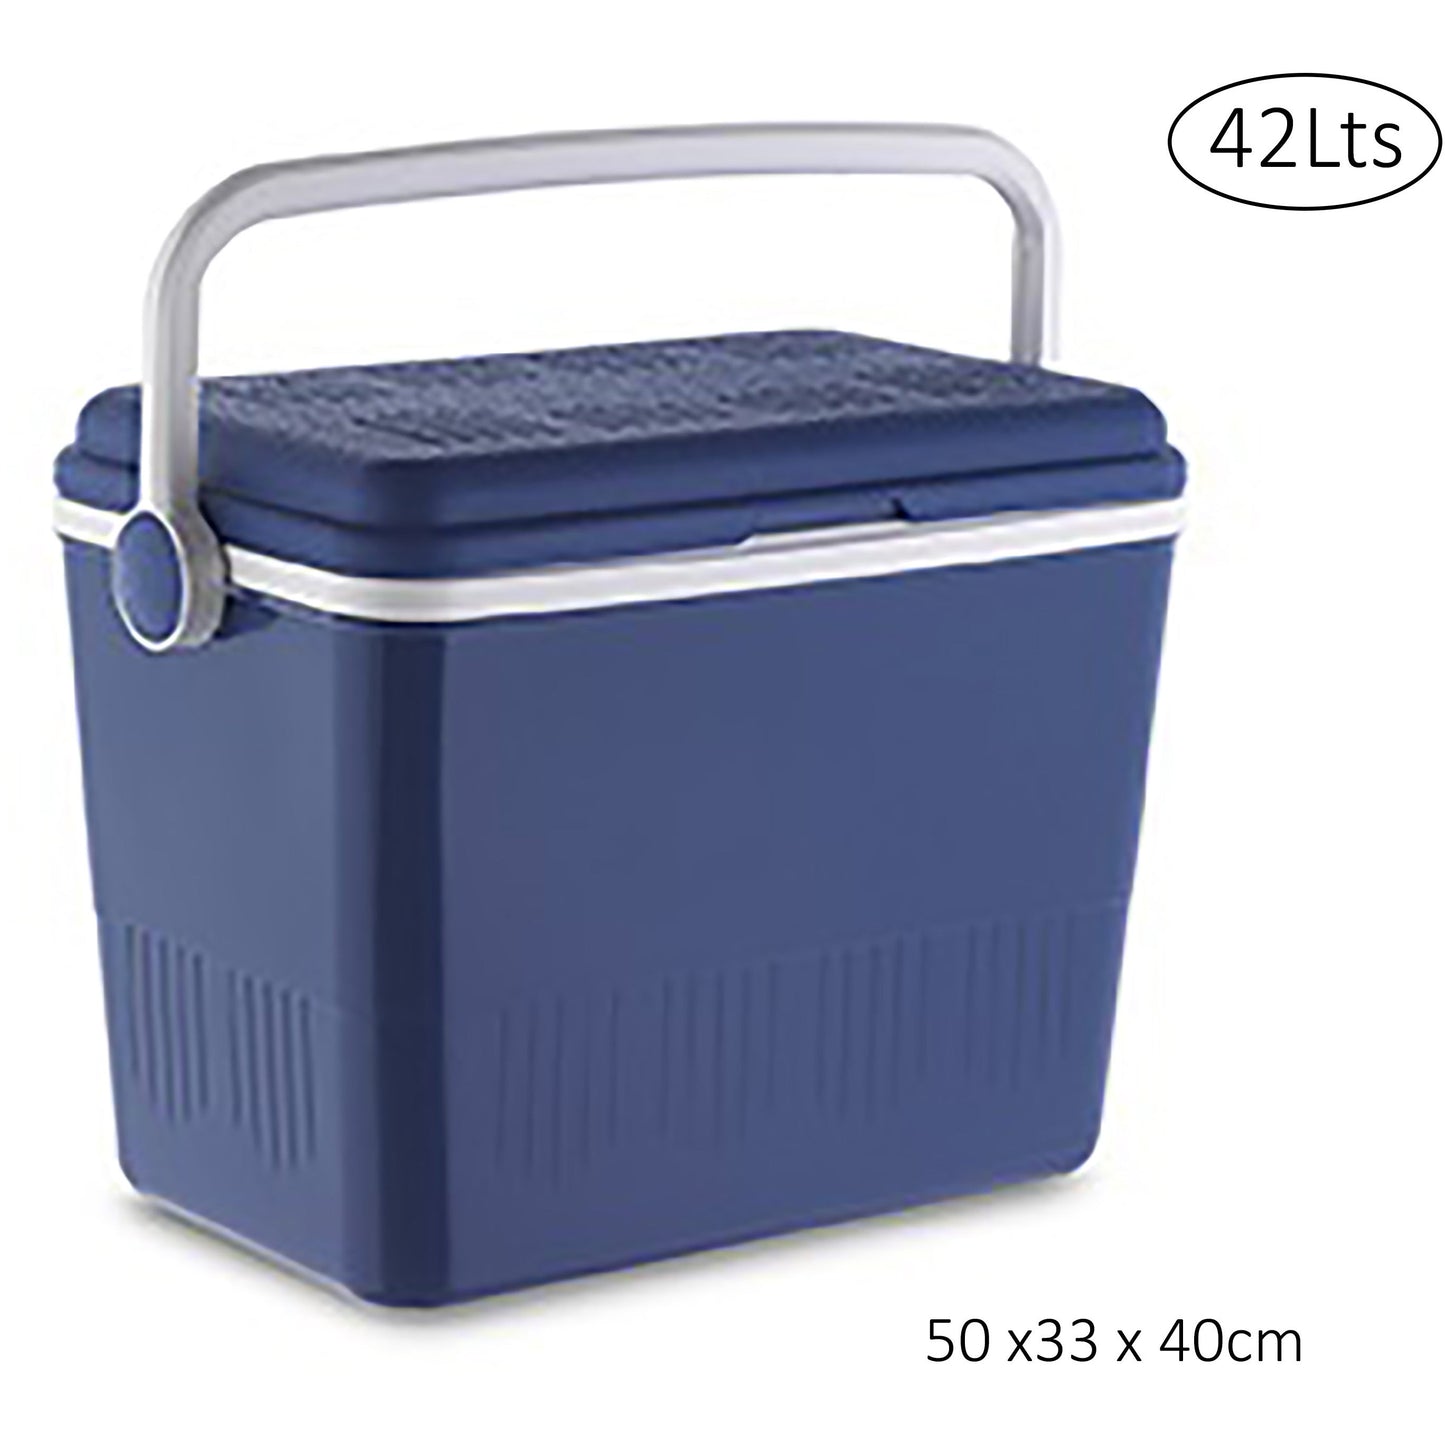 Portable Cooler Box - 42 Litres